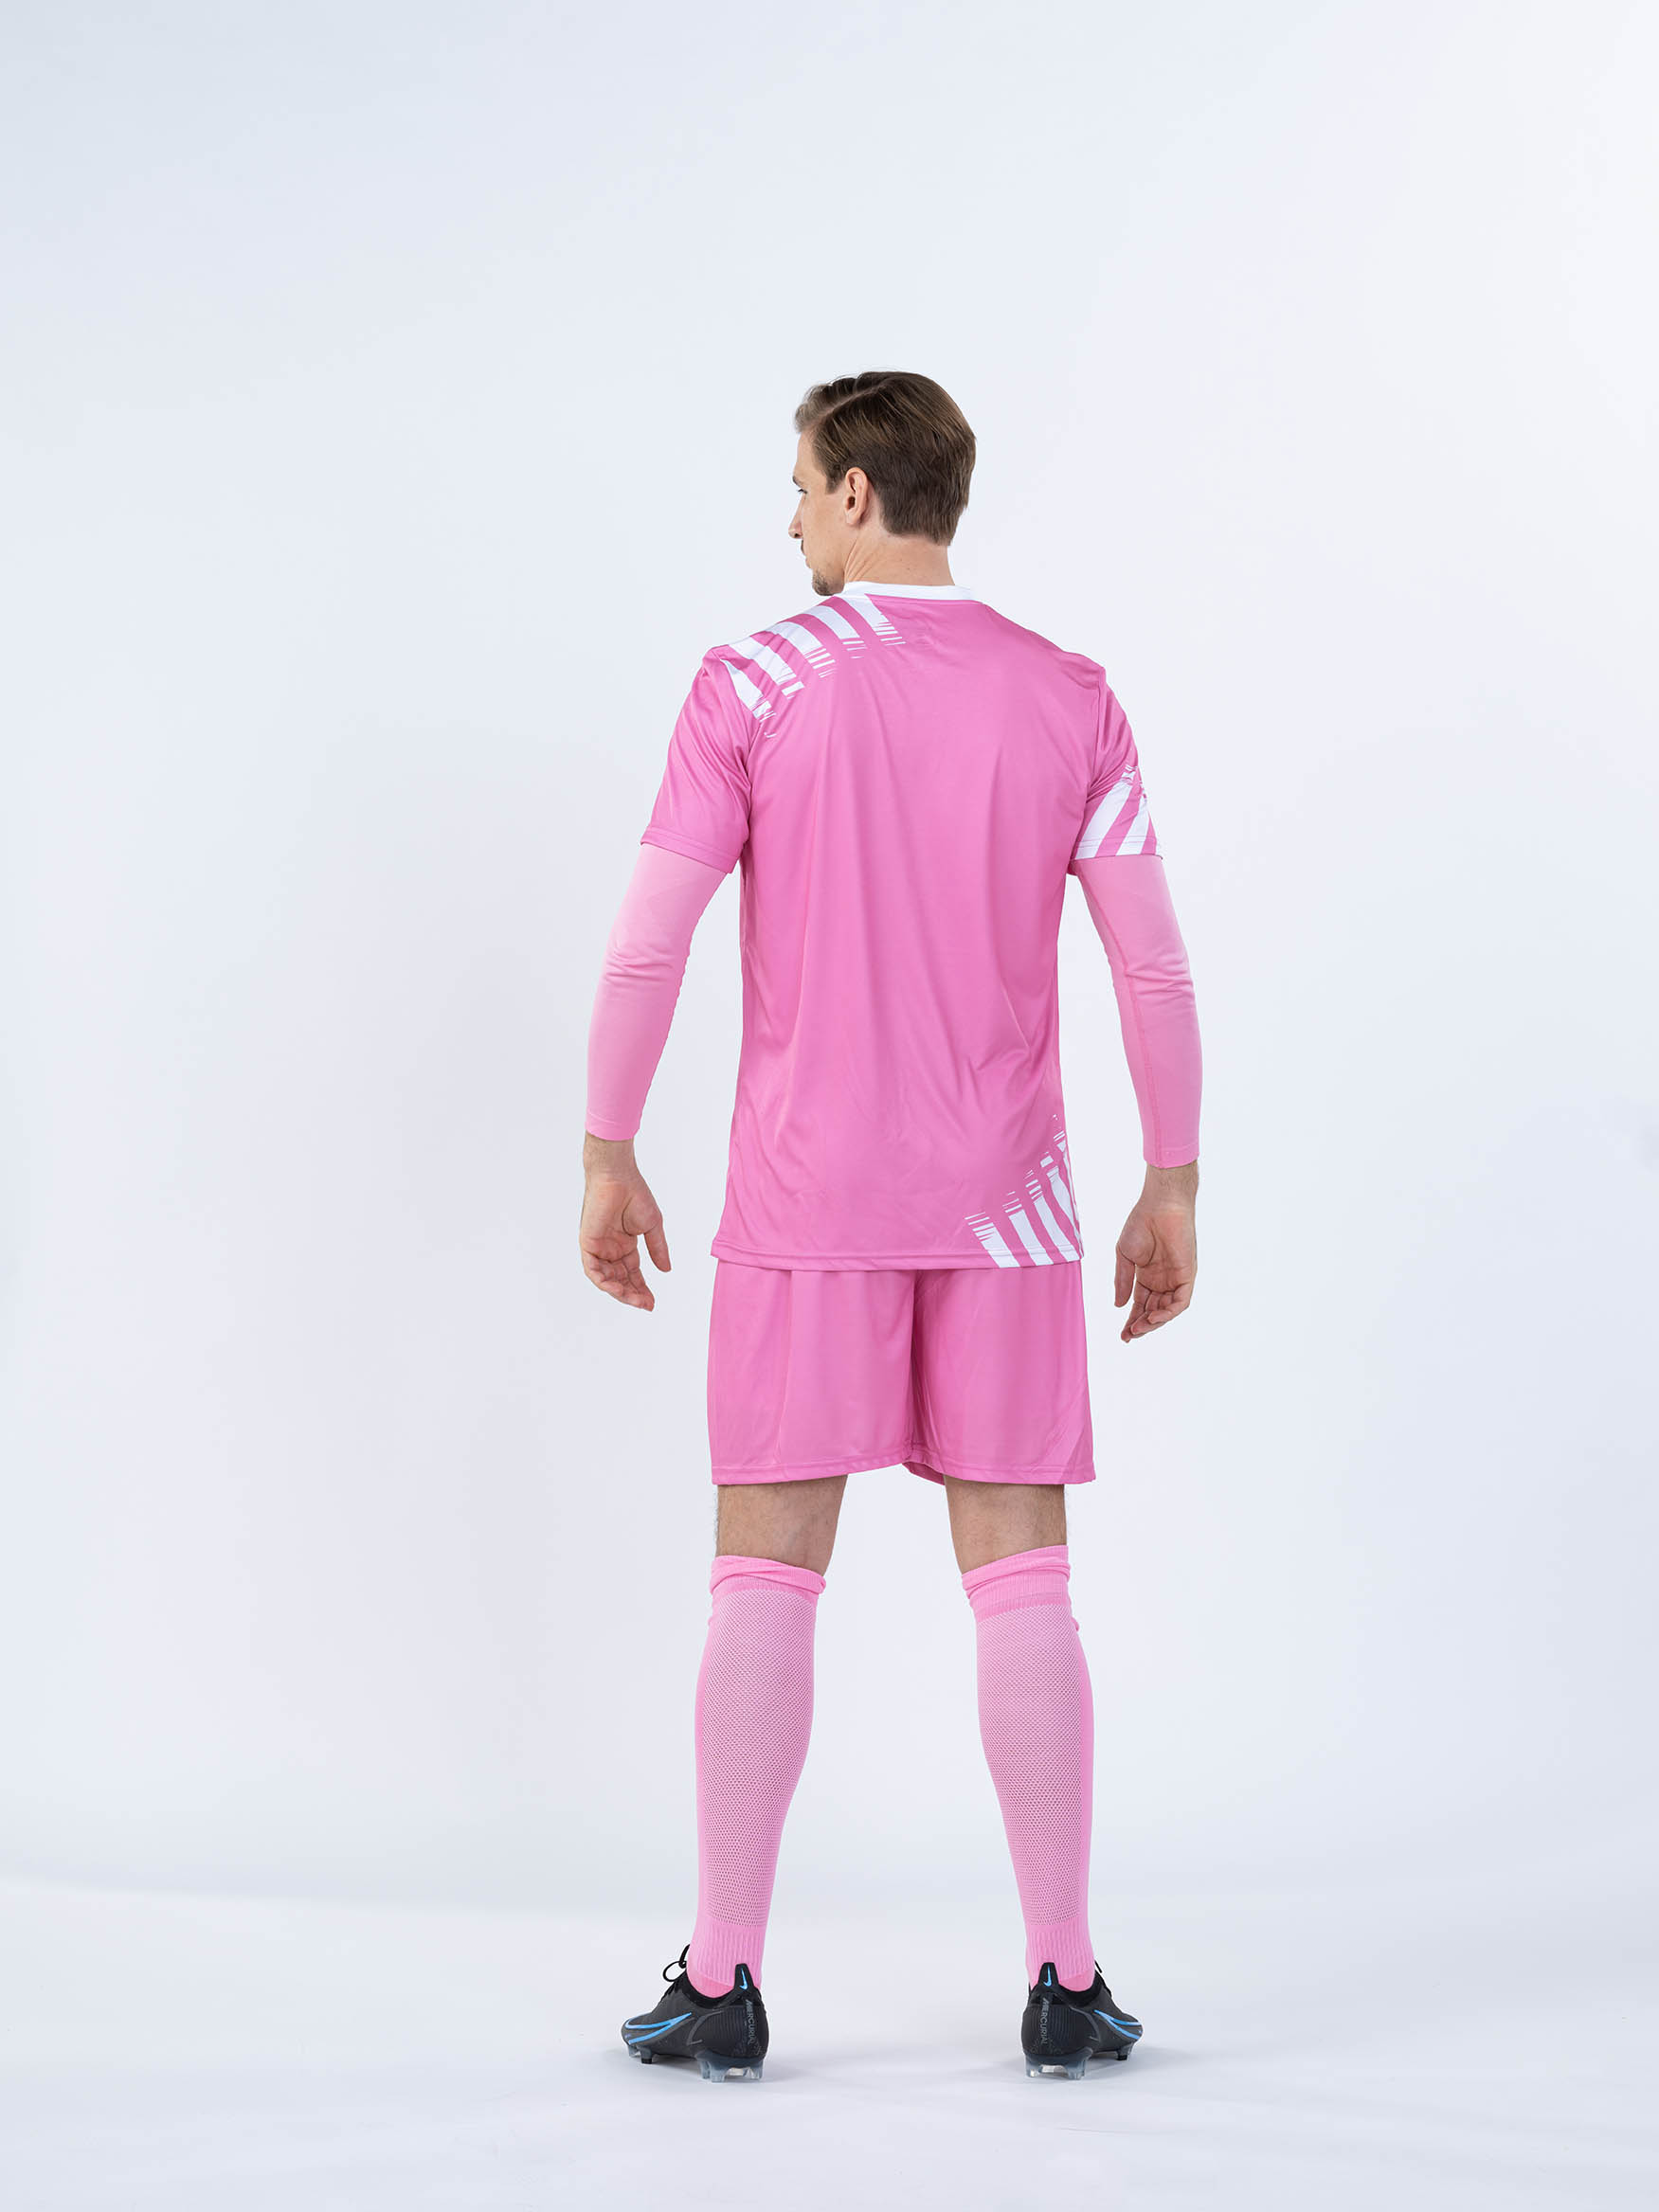 Trainingskleidung pink